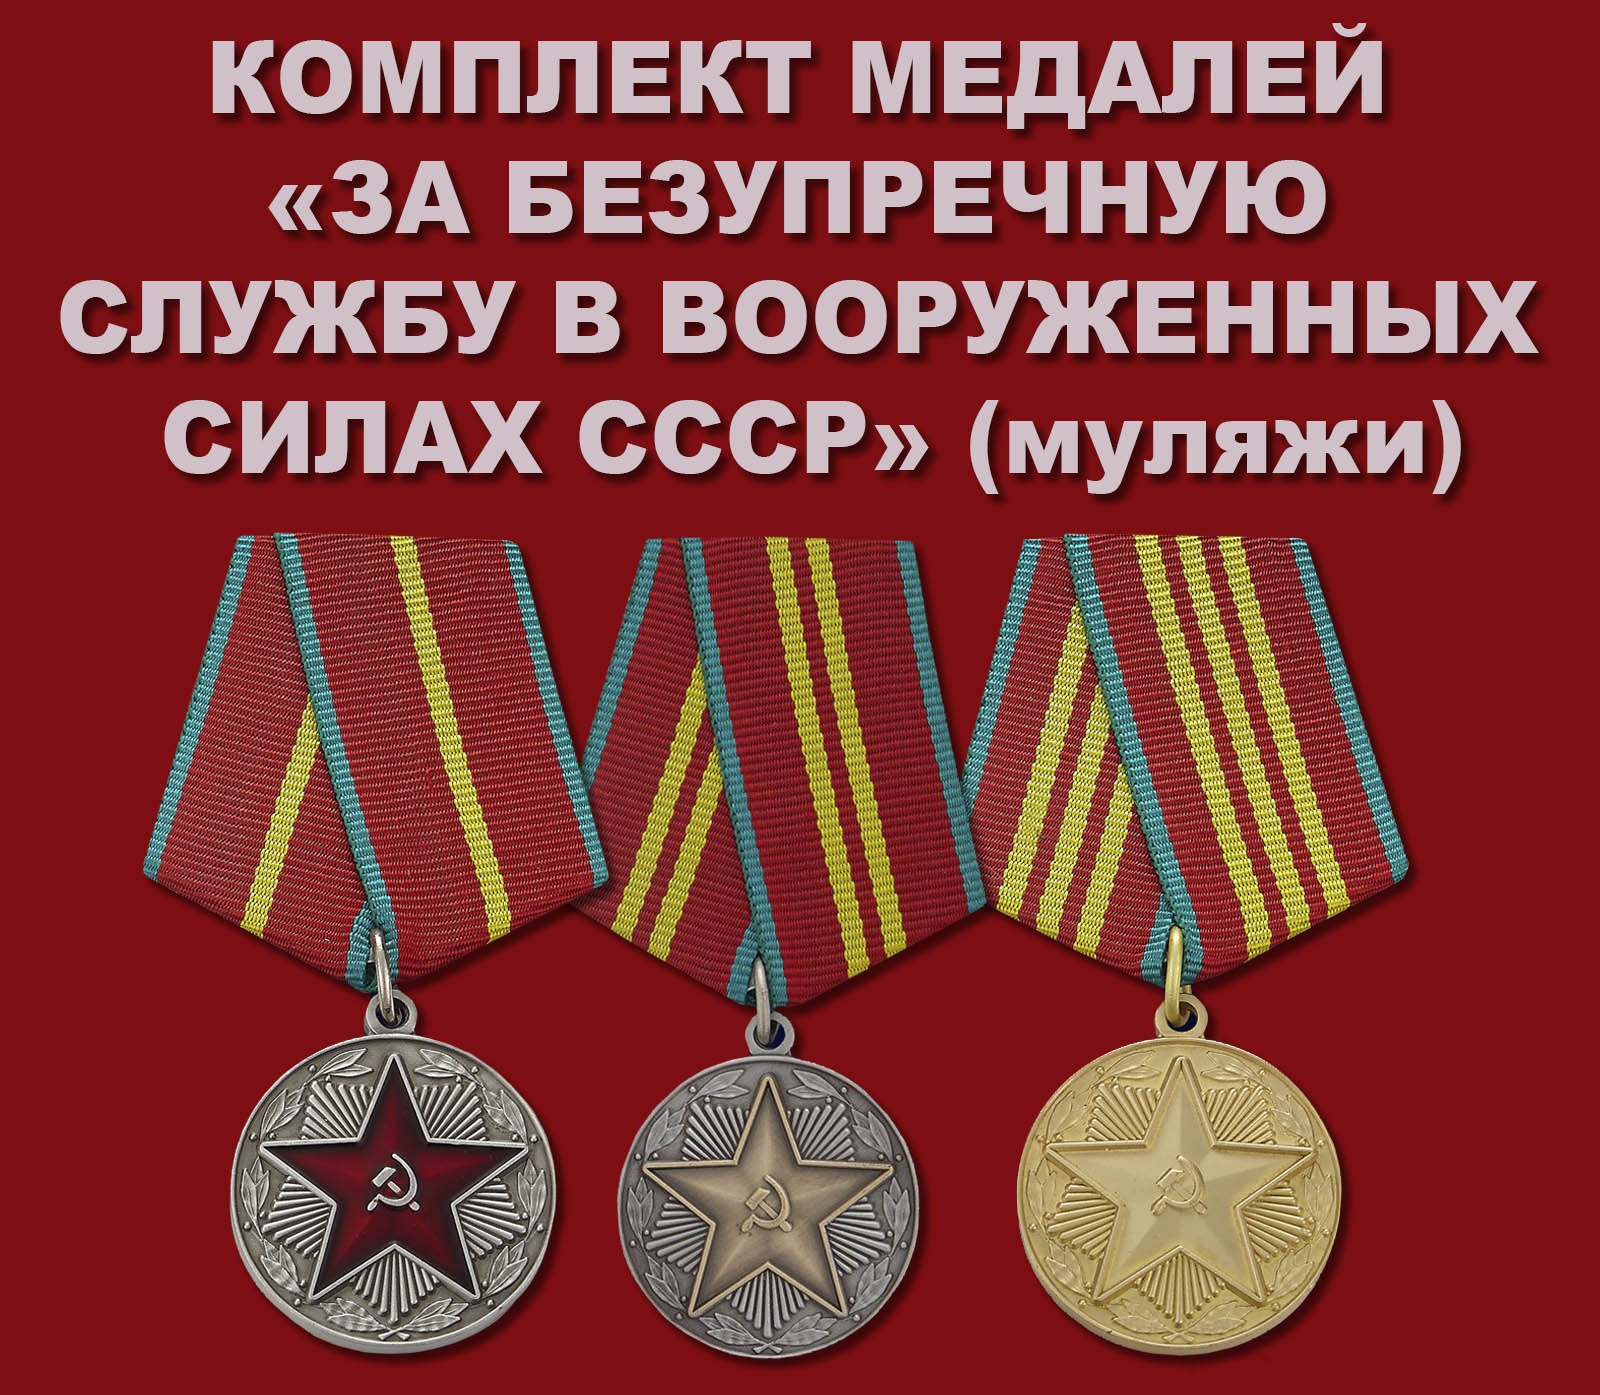 Медали "За безупречную службу" I, II, III степени (аверсы)